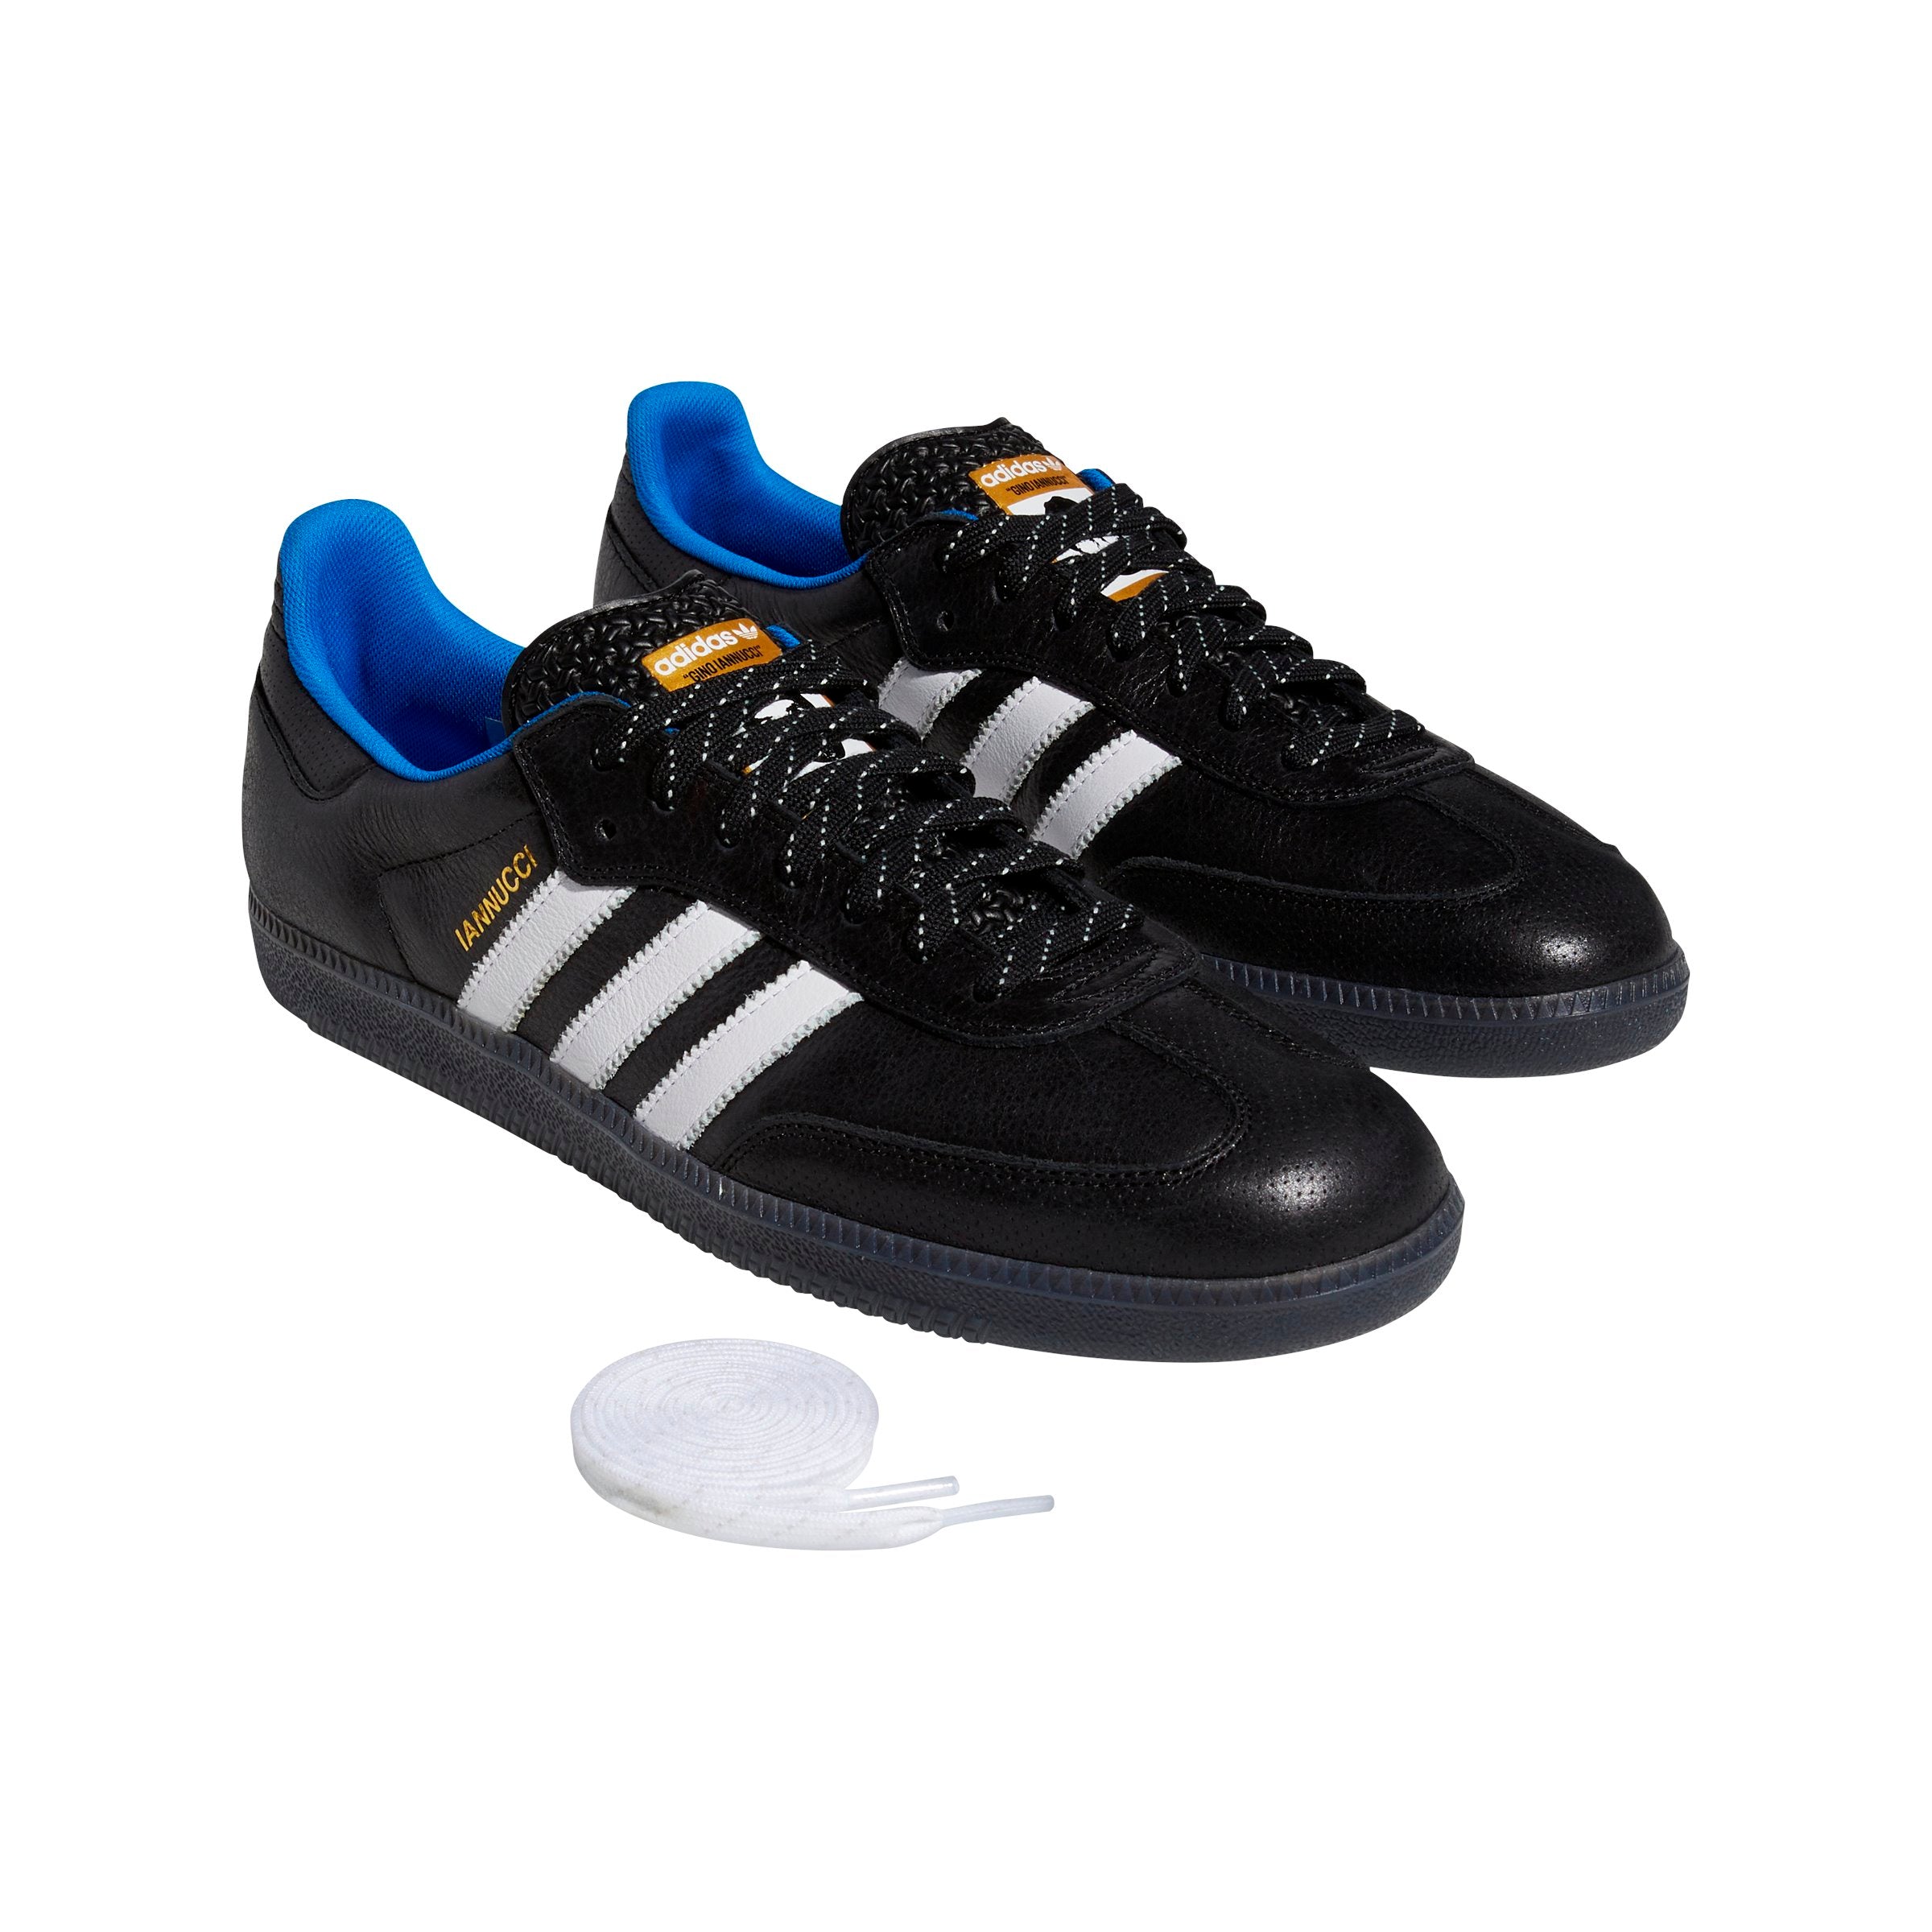 Adidas Samba ADV RYR "Iannucci" - Black-White-Blue Sneaker adidas Skateboarding 